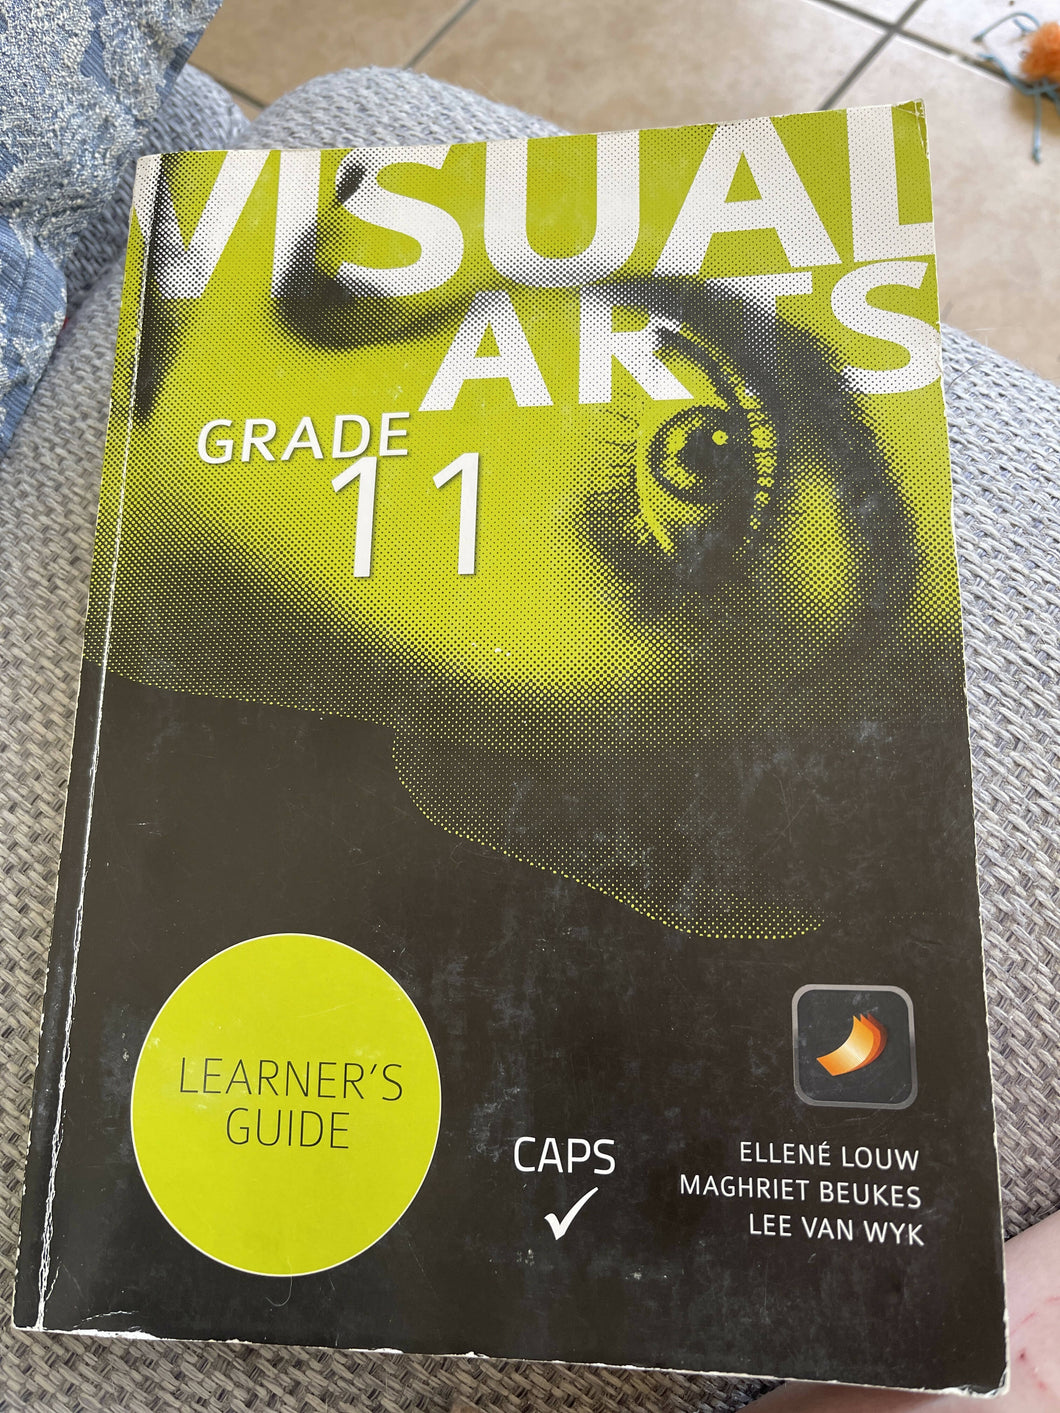 Visual arts grade 11 learner’s guide CAPS